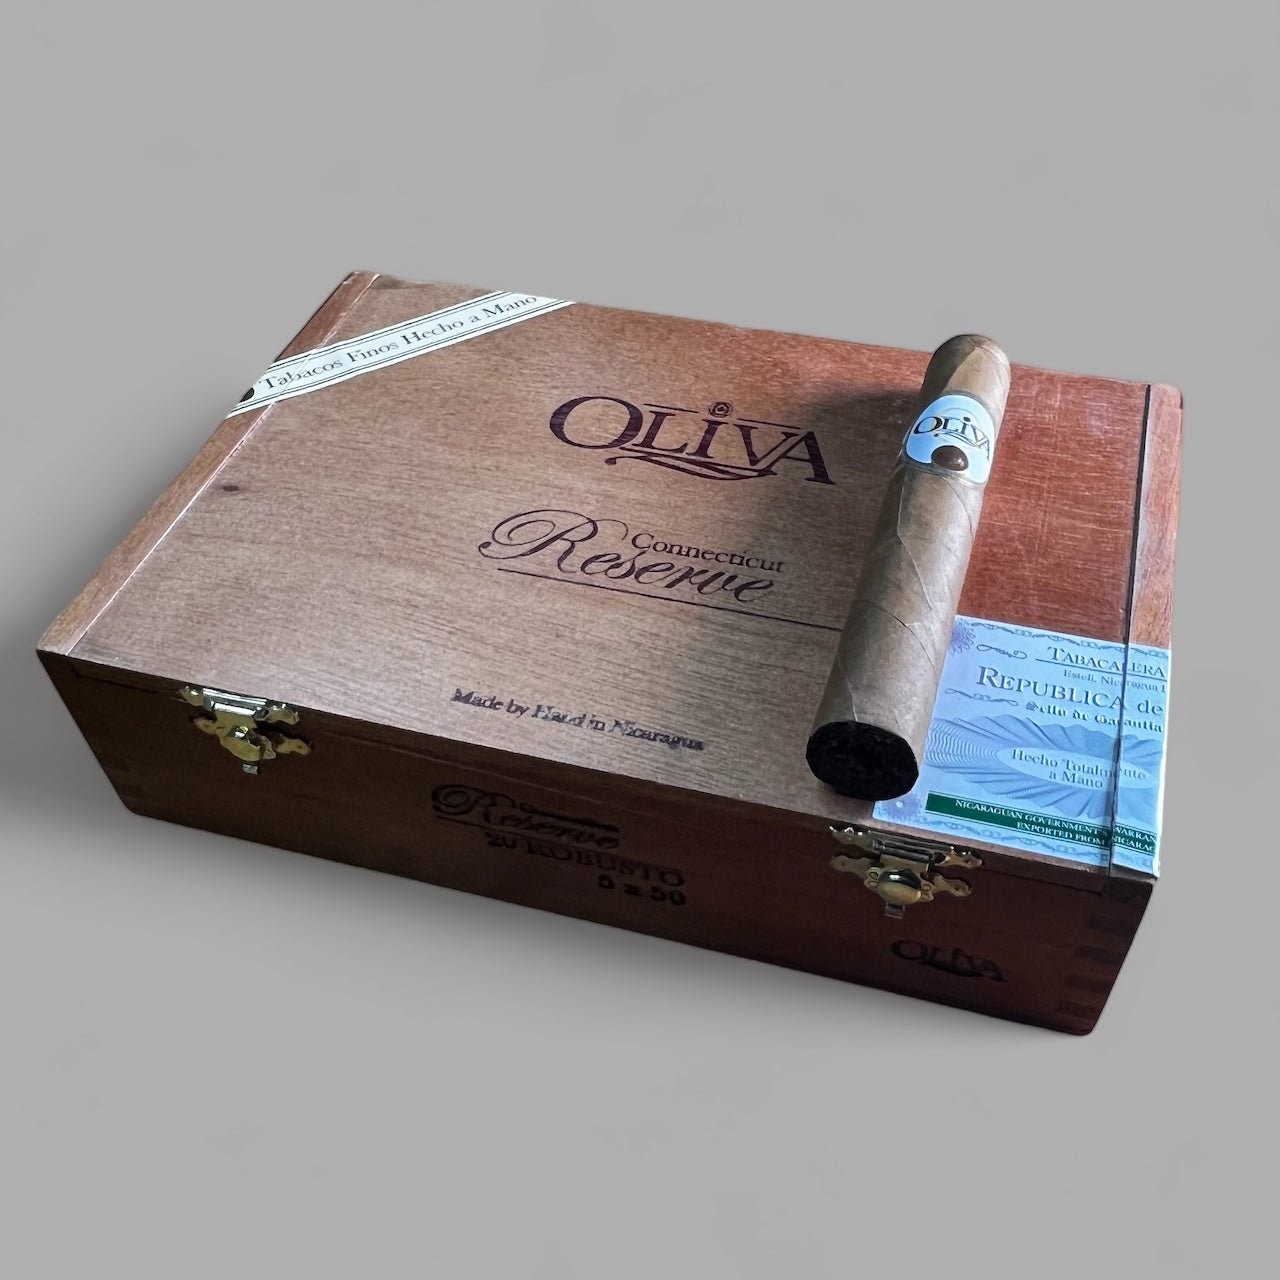 Oliva Connecticut Reserve Robusto - Cigar 30